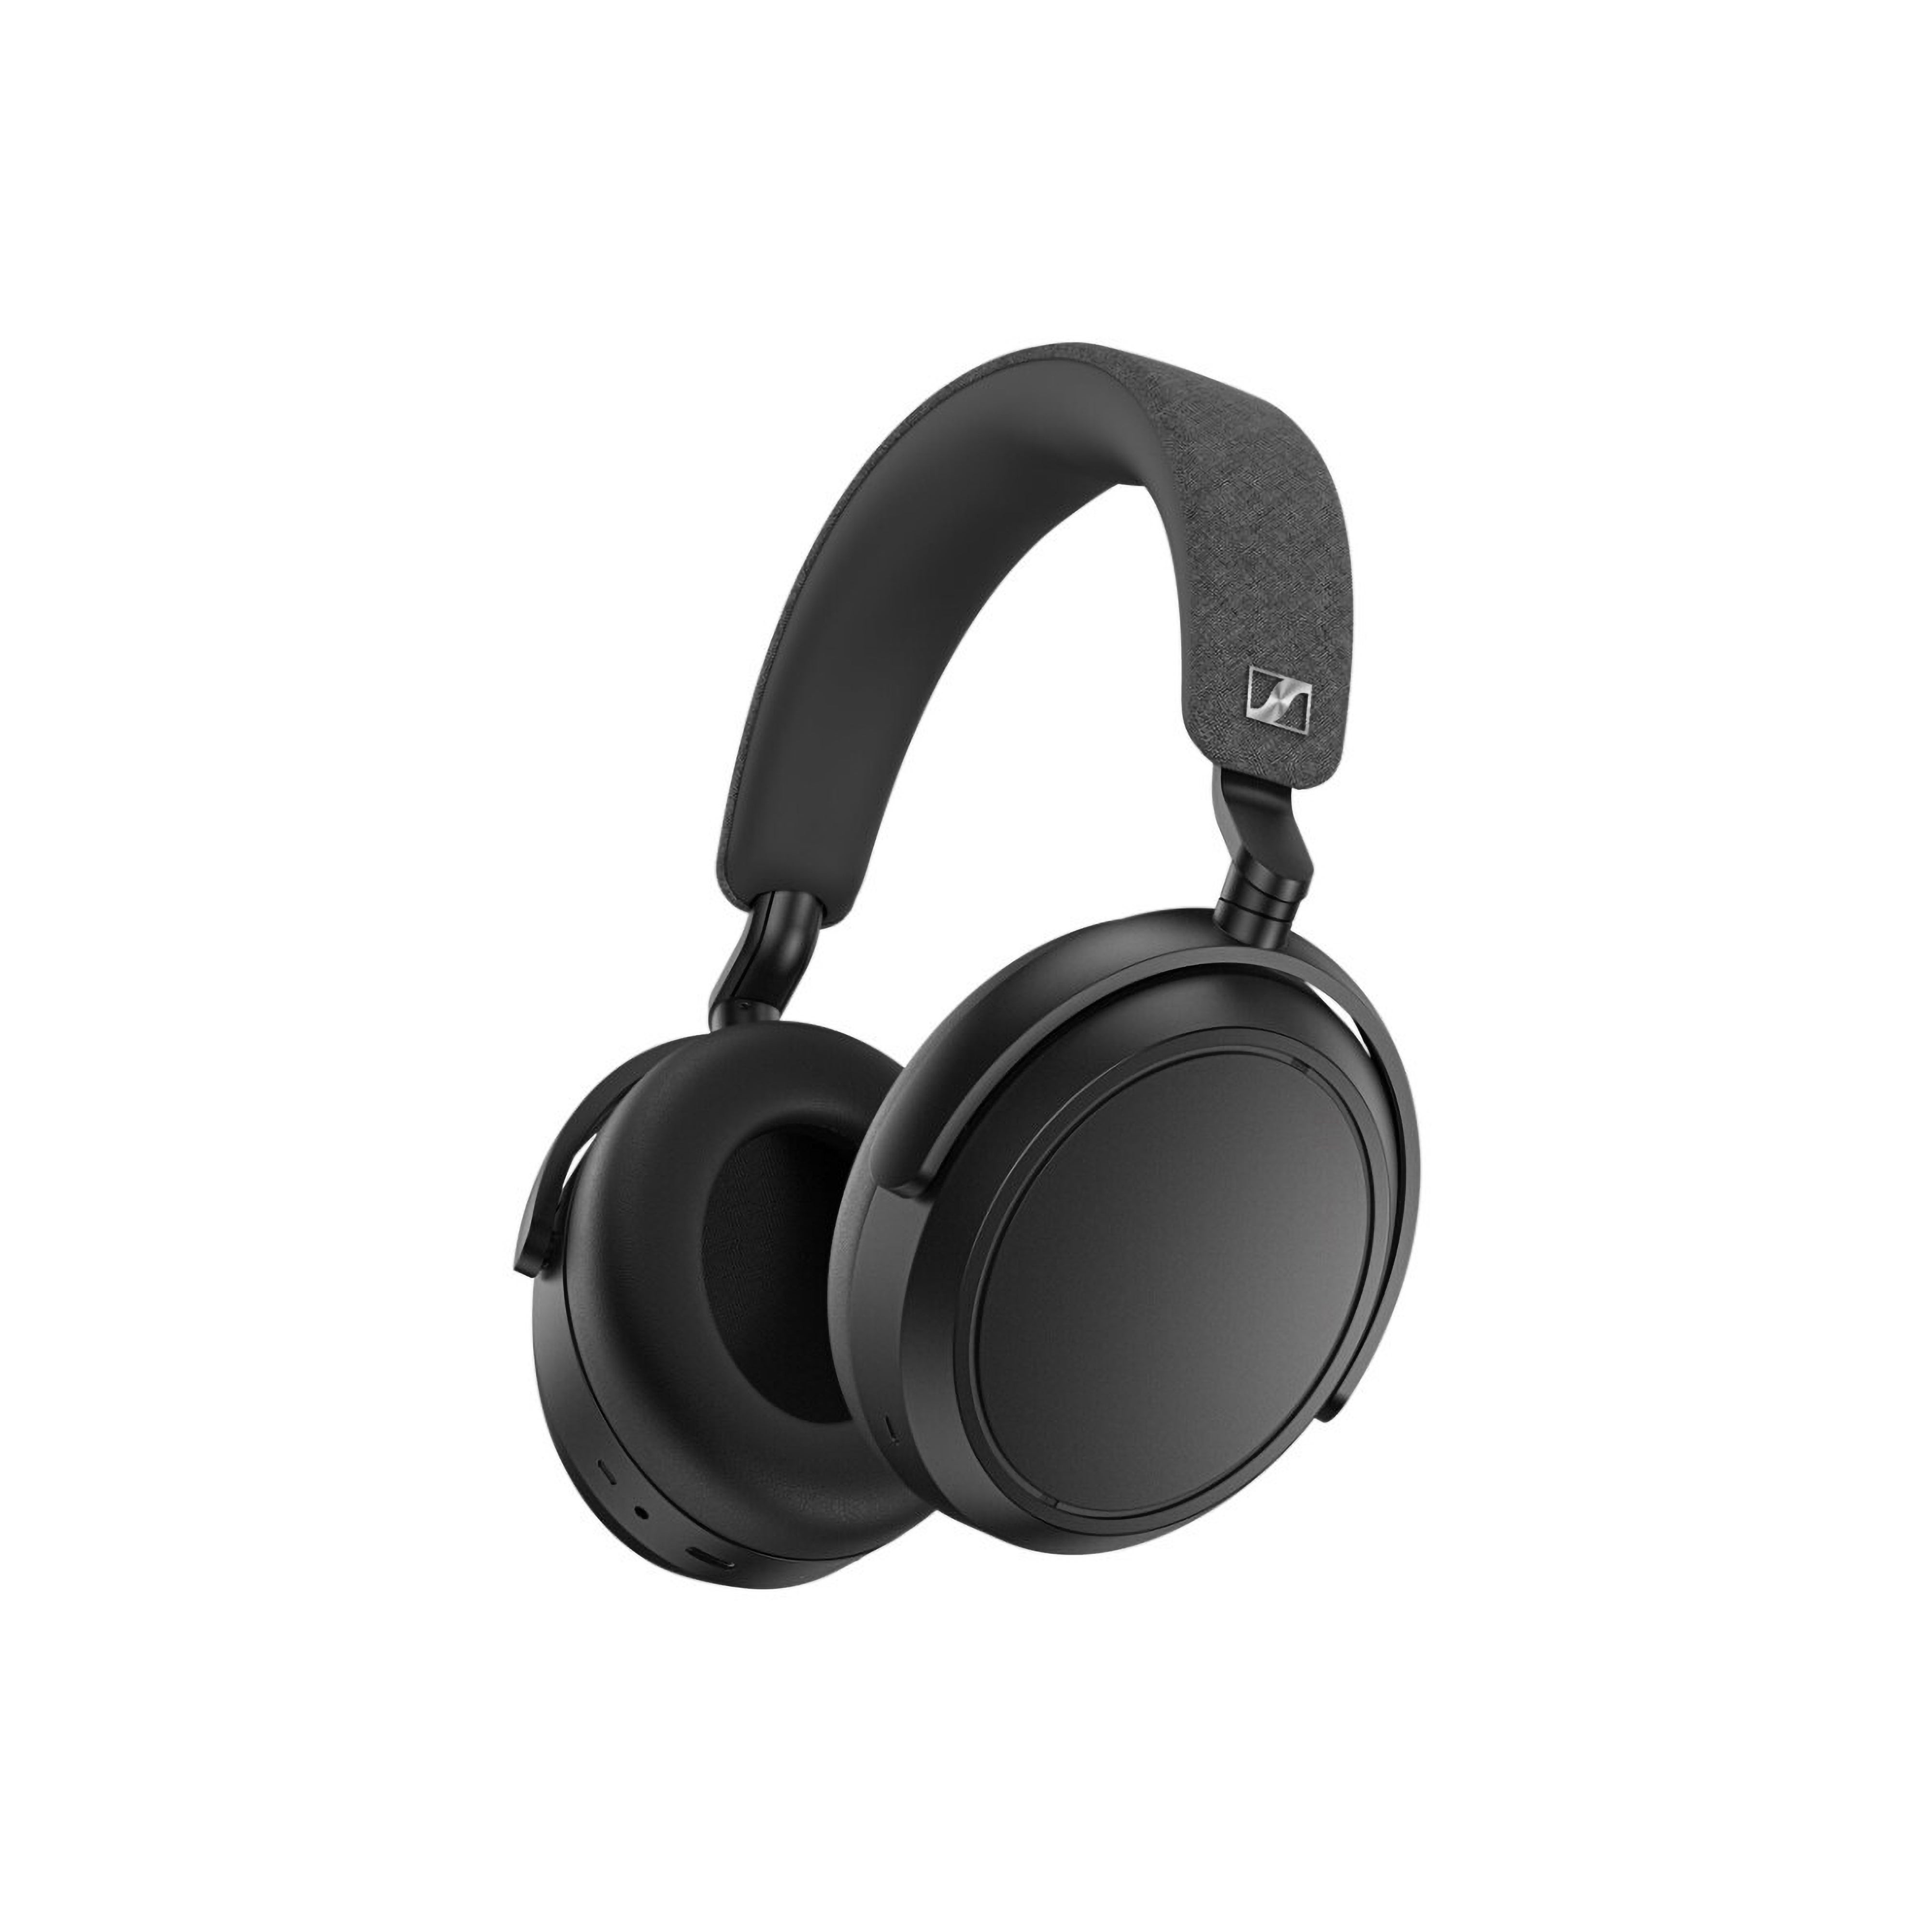 Momentum 4 Wireless Noise Canceling Over-Ear Headphones Black